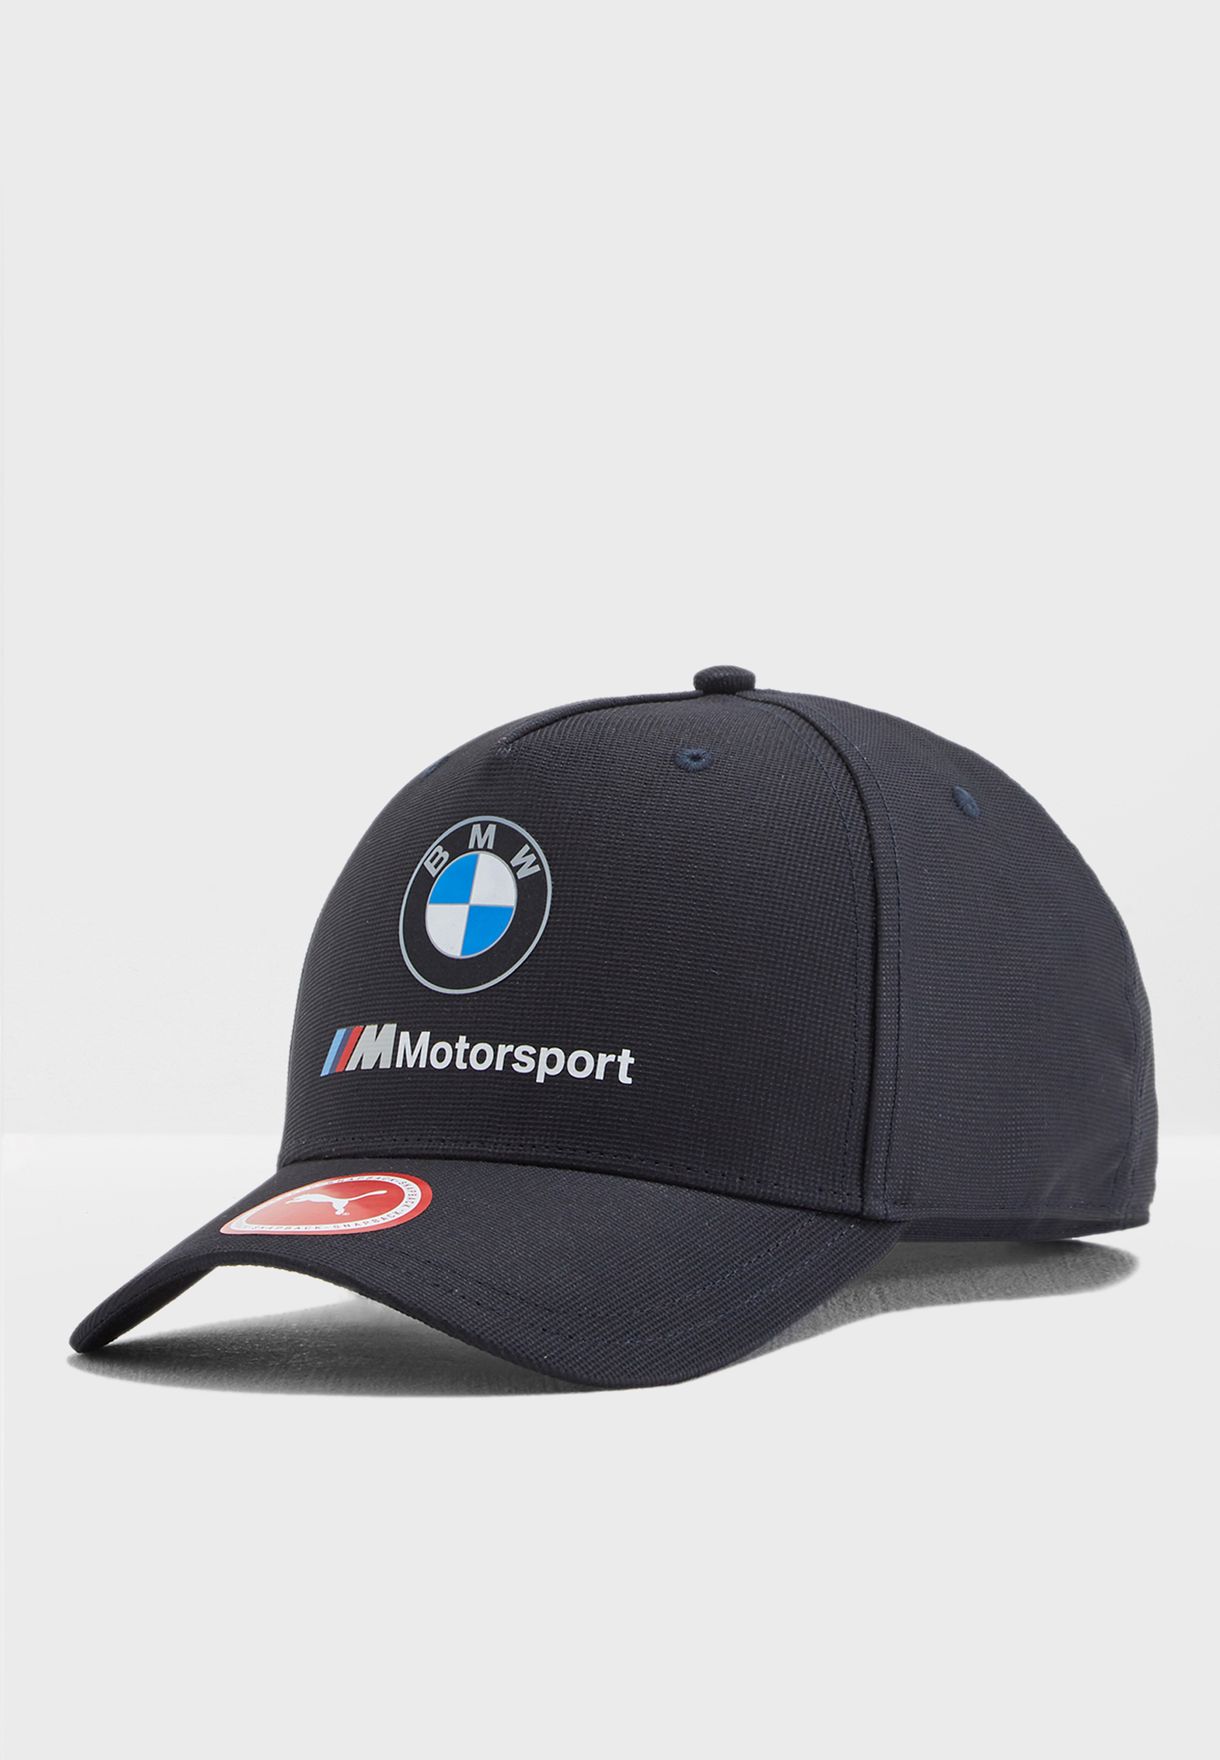 New Genuine BMW Men's Performance Max Cap Hat Black OEM 80902349479 